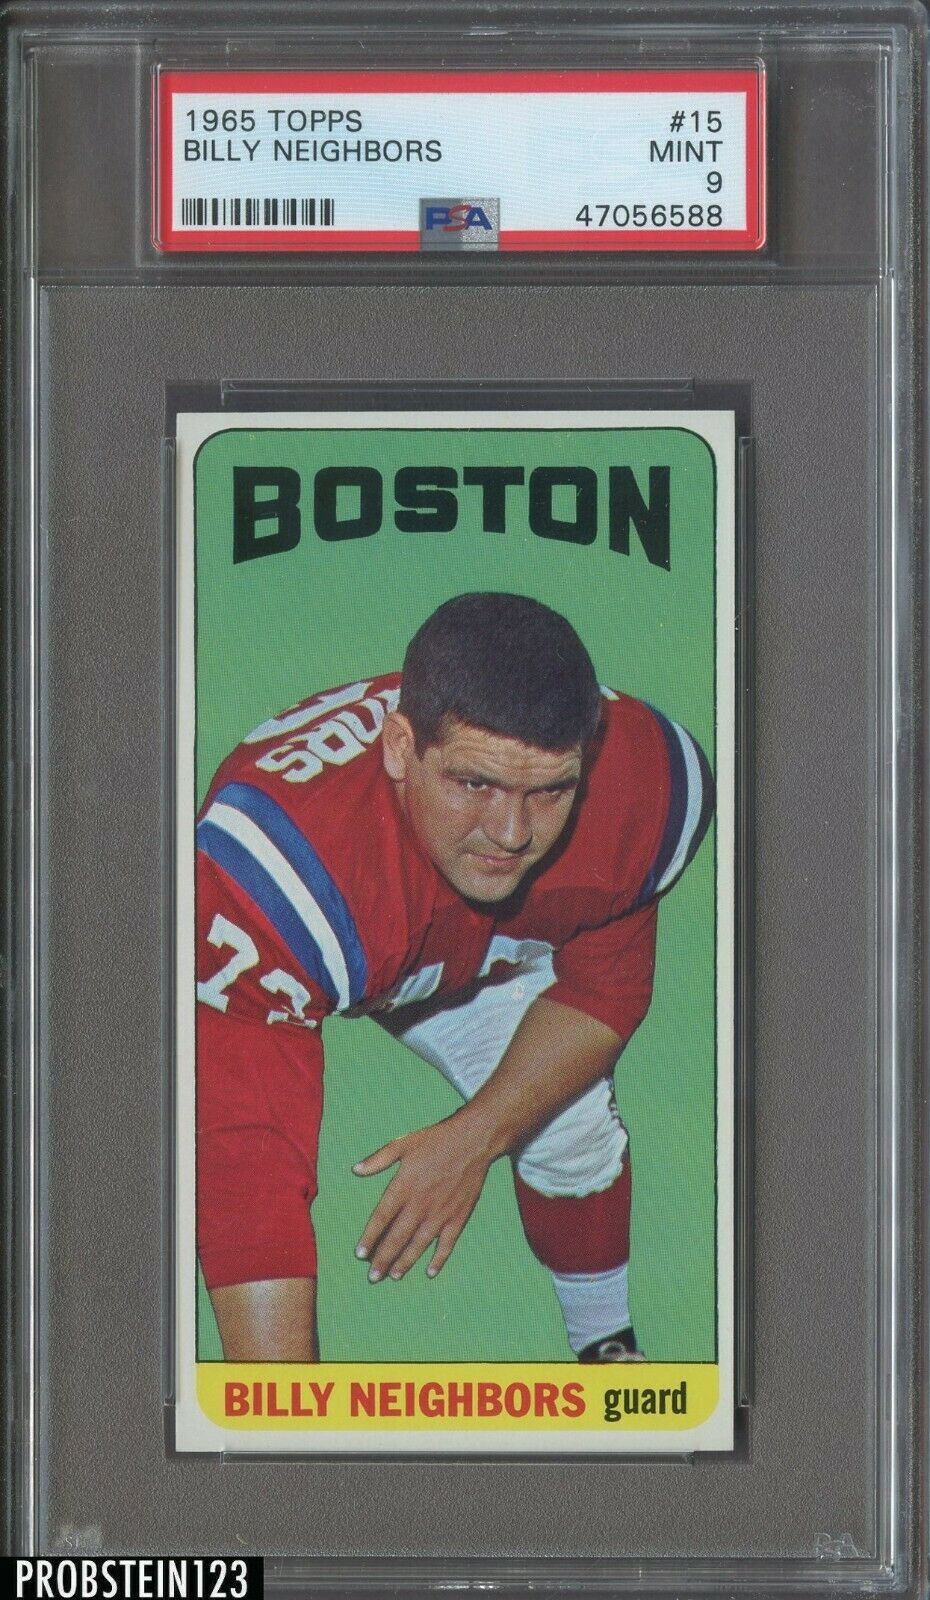 1965 Topps Football 15 Billy Neighbors Boston Patriots PSA 9 MINT